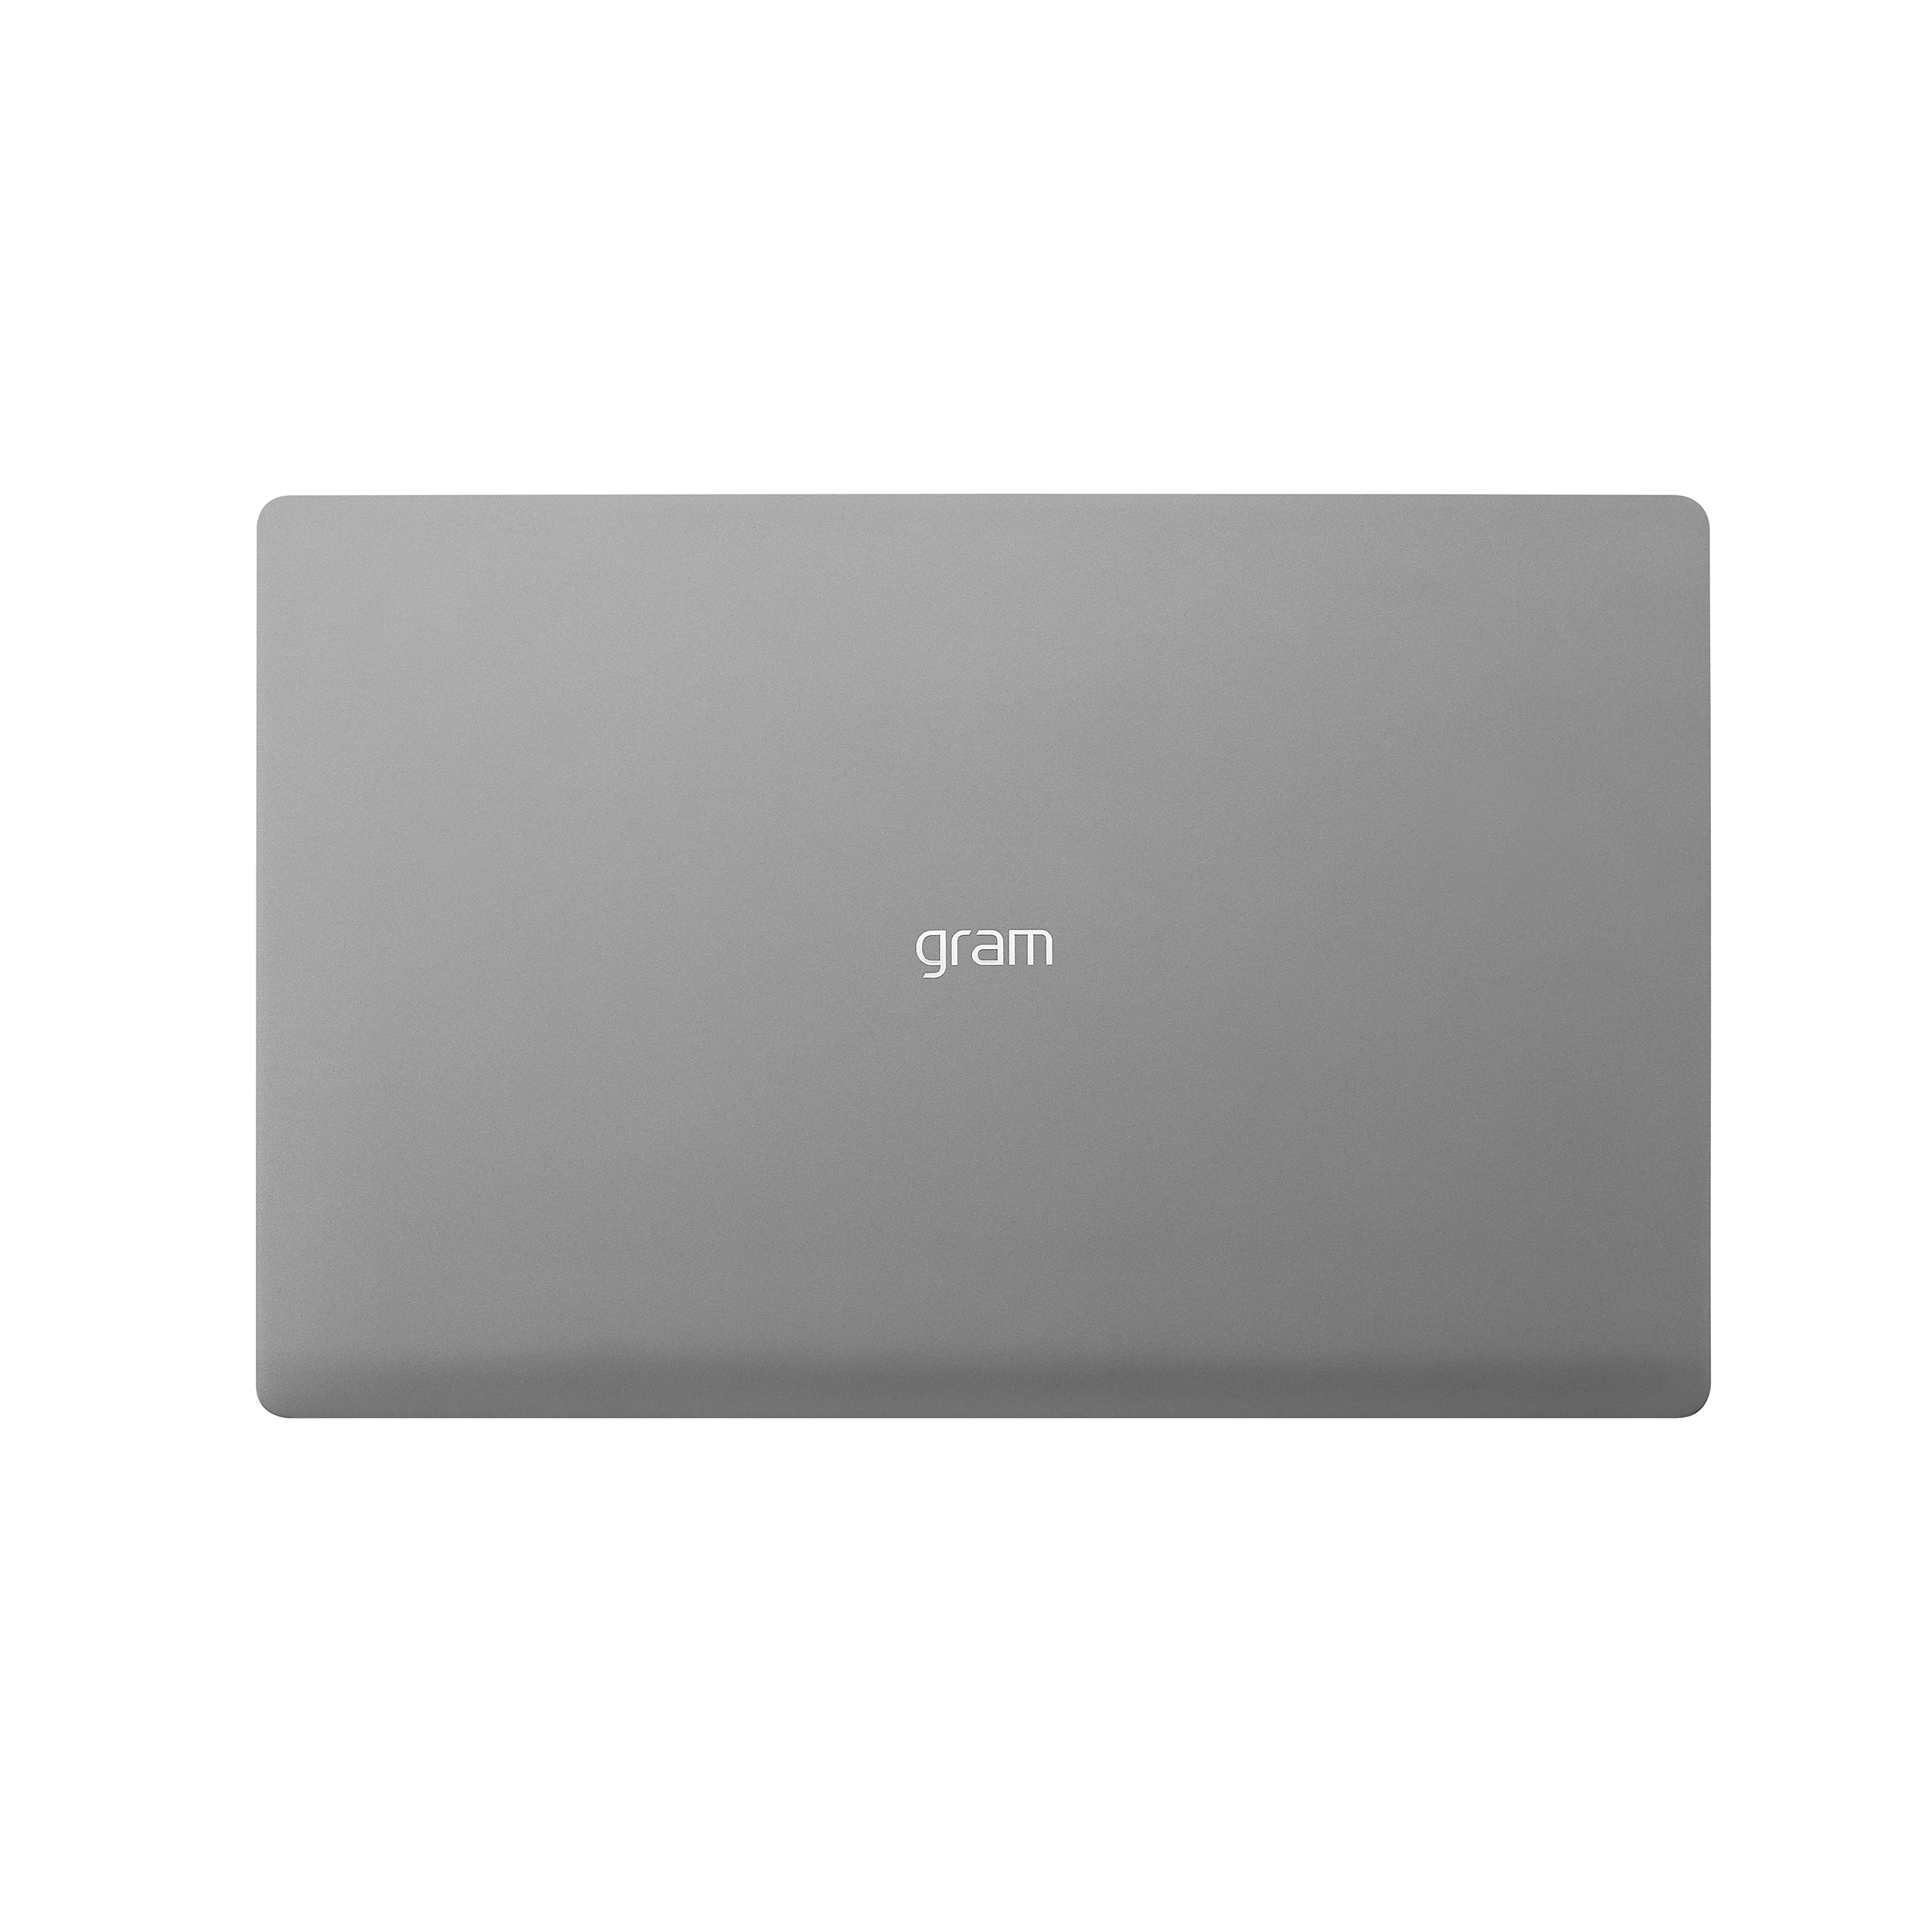 LG gram 14 inch Ultra-Lightweight Laptop with 10th Gen Intel Core Processor w/Intel Iris Plus - 14Z90N-U.AAS7U1 - image 12 of 13